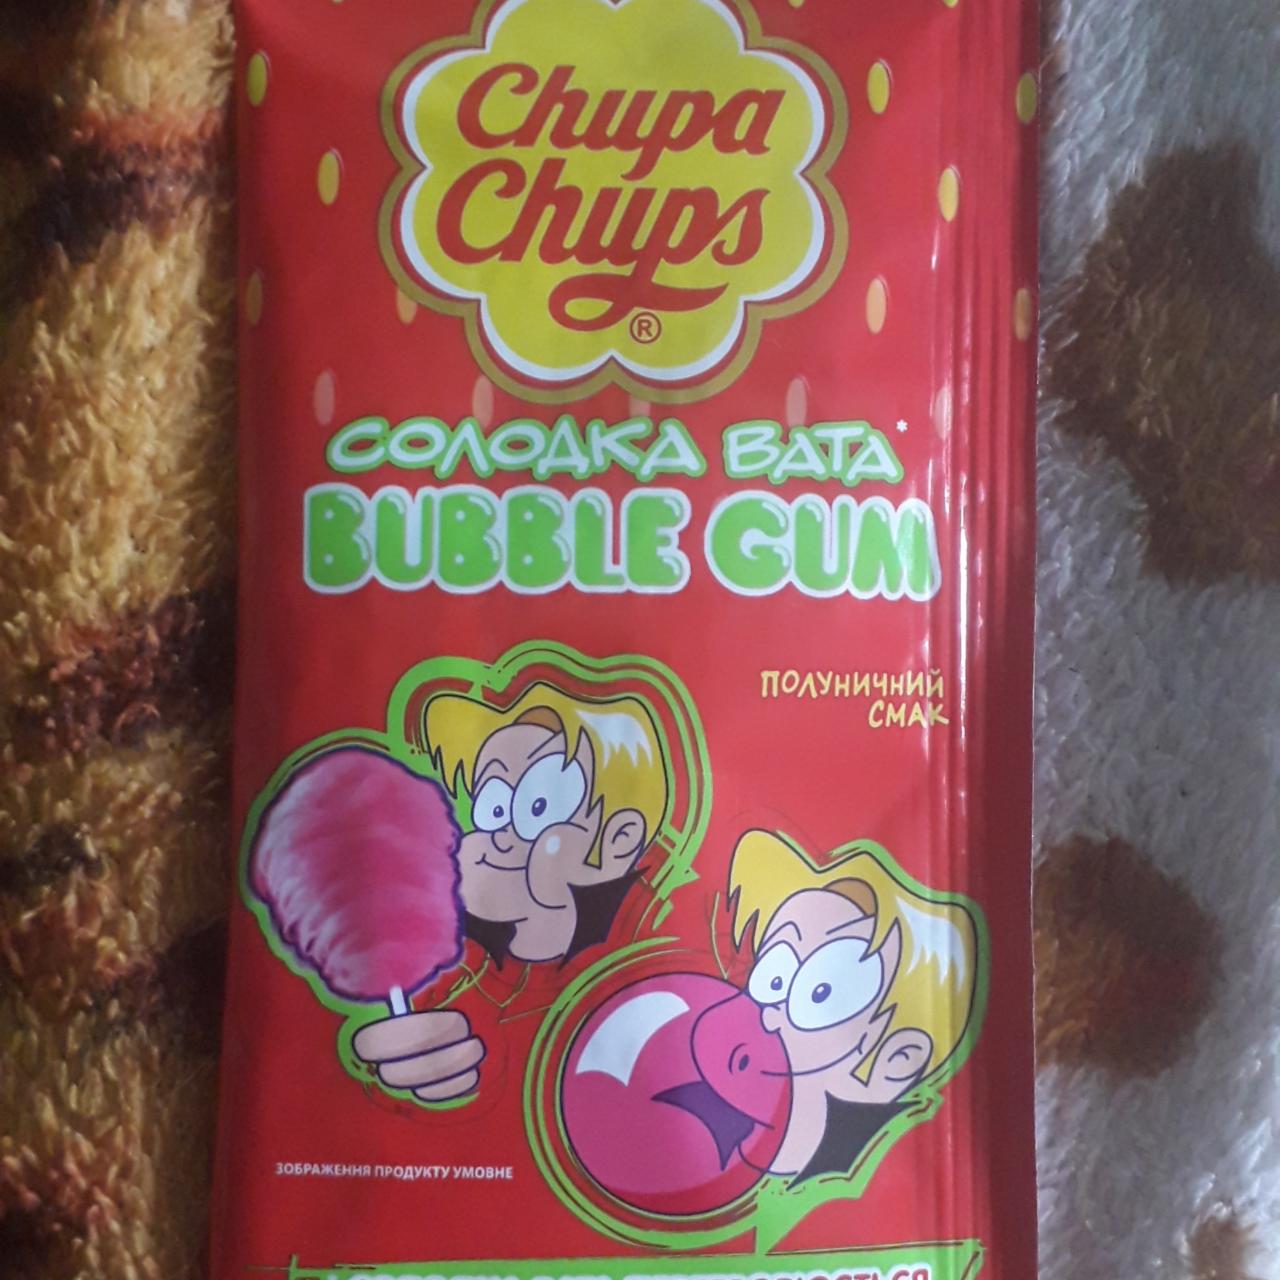 Фото - Жевательная резинка Сладкая вата Bubble Gum клубничный вкус Chupa Chups